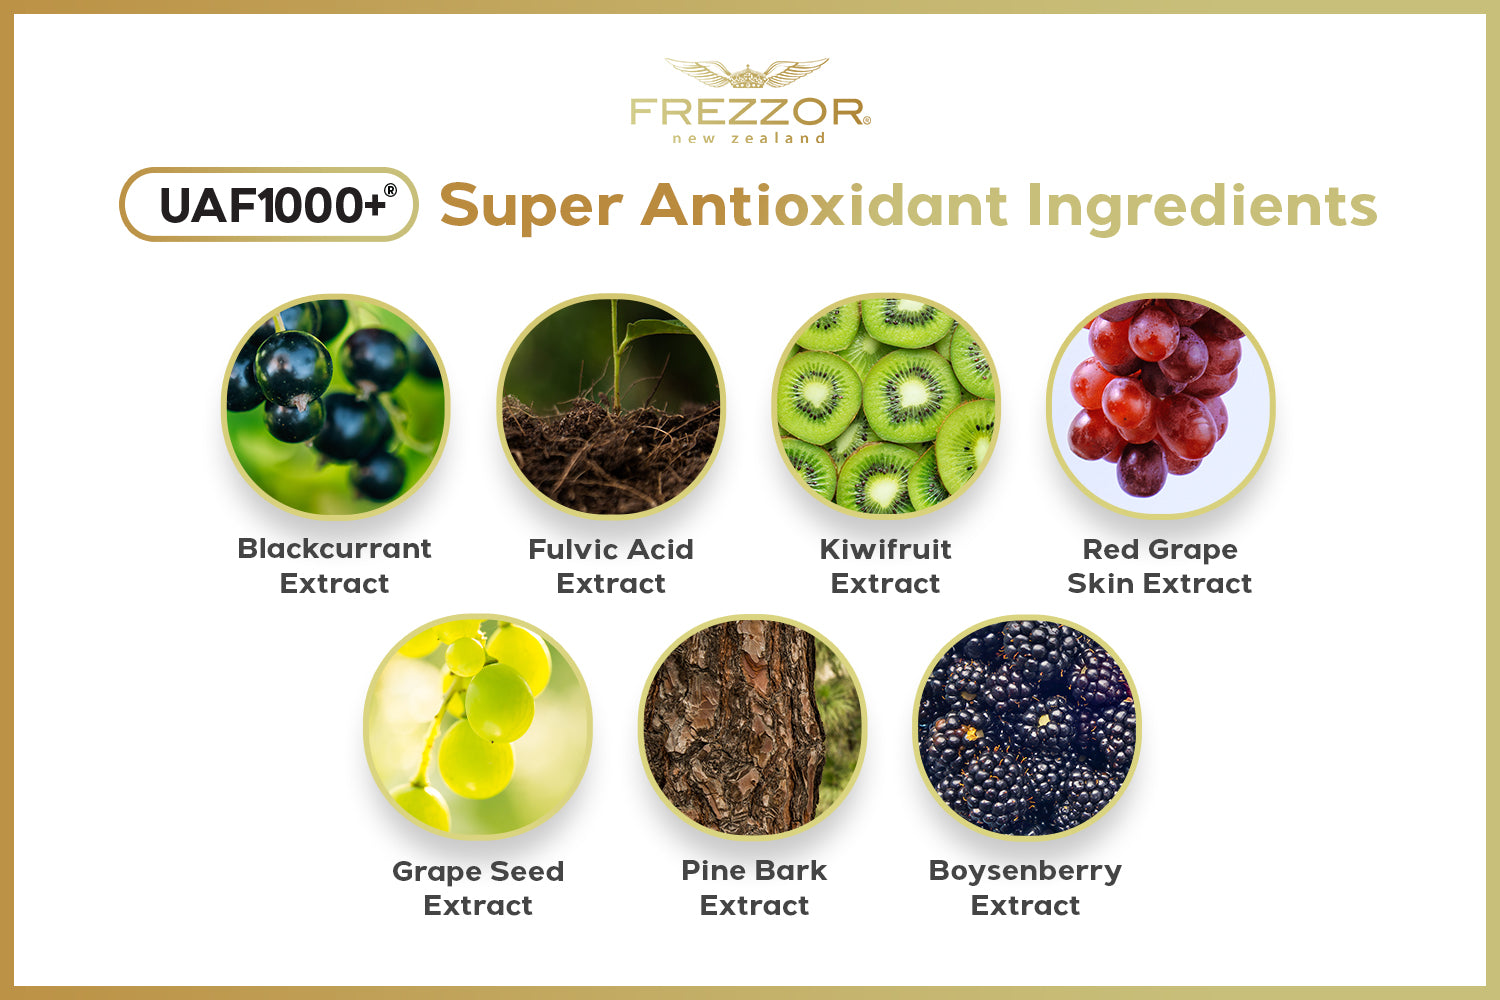 The Benefits of UAF1000+ Super Antioxidant